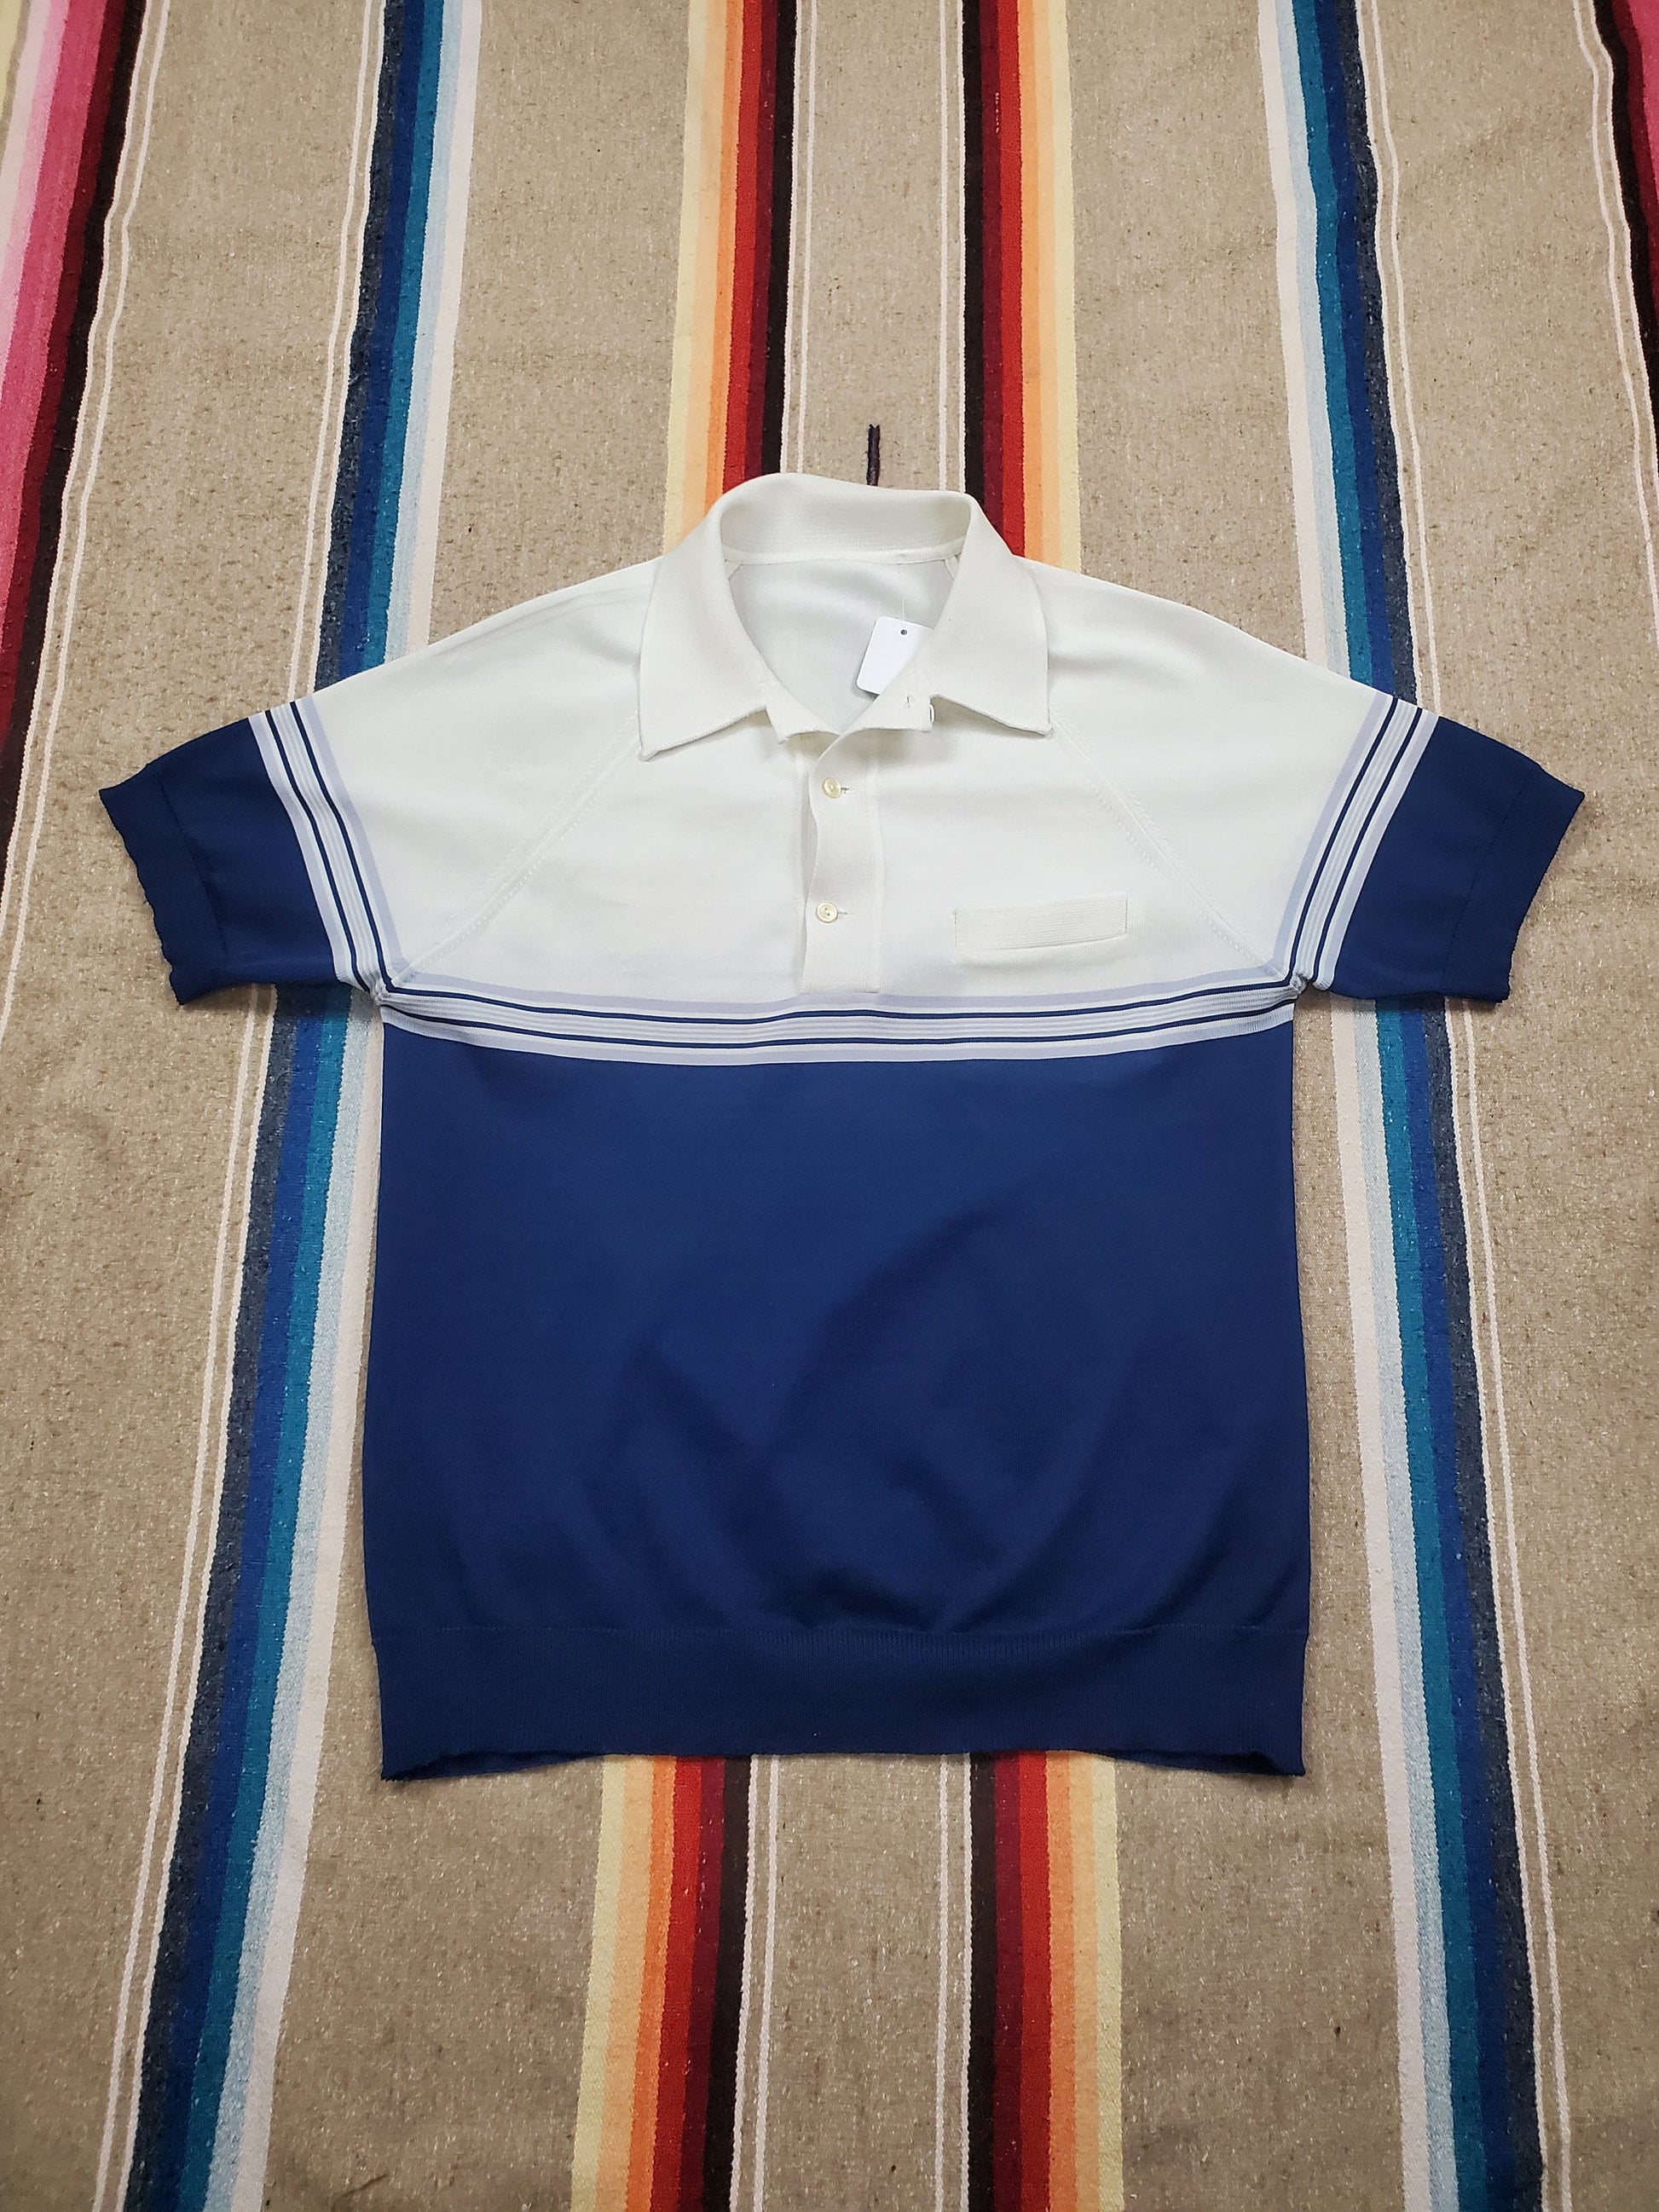 1970s/1980s Striped Knit Polo Shirt Size M